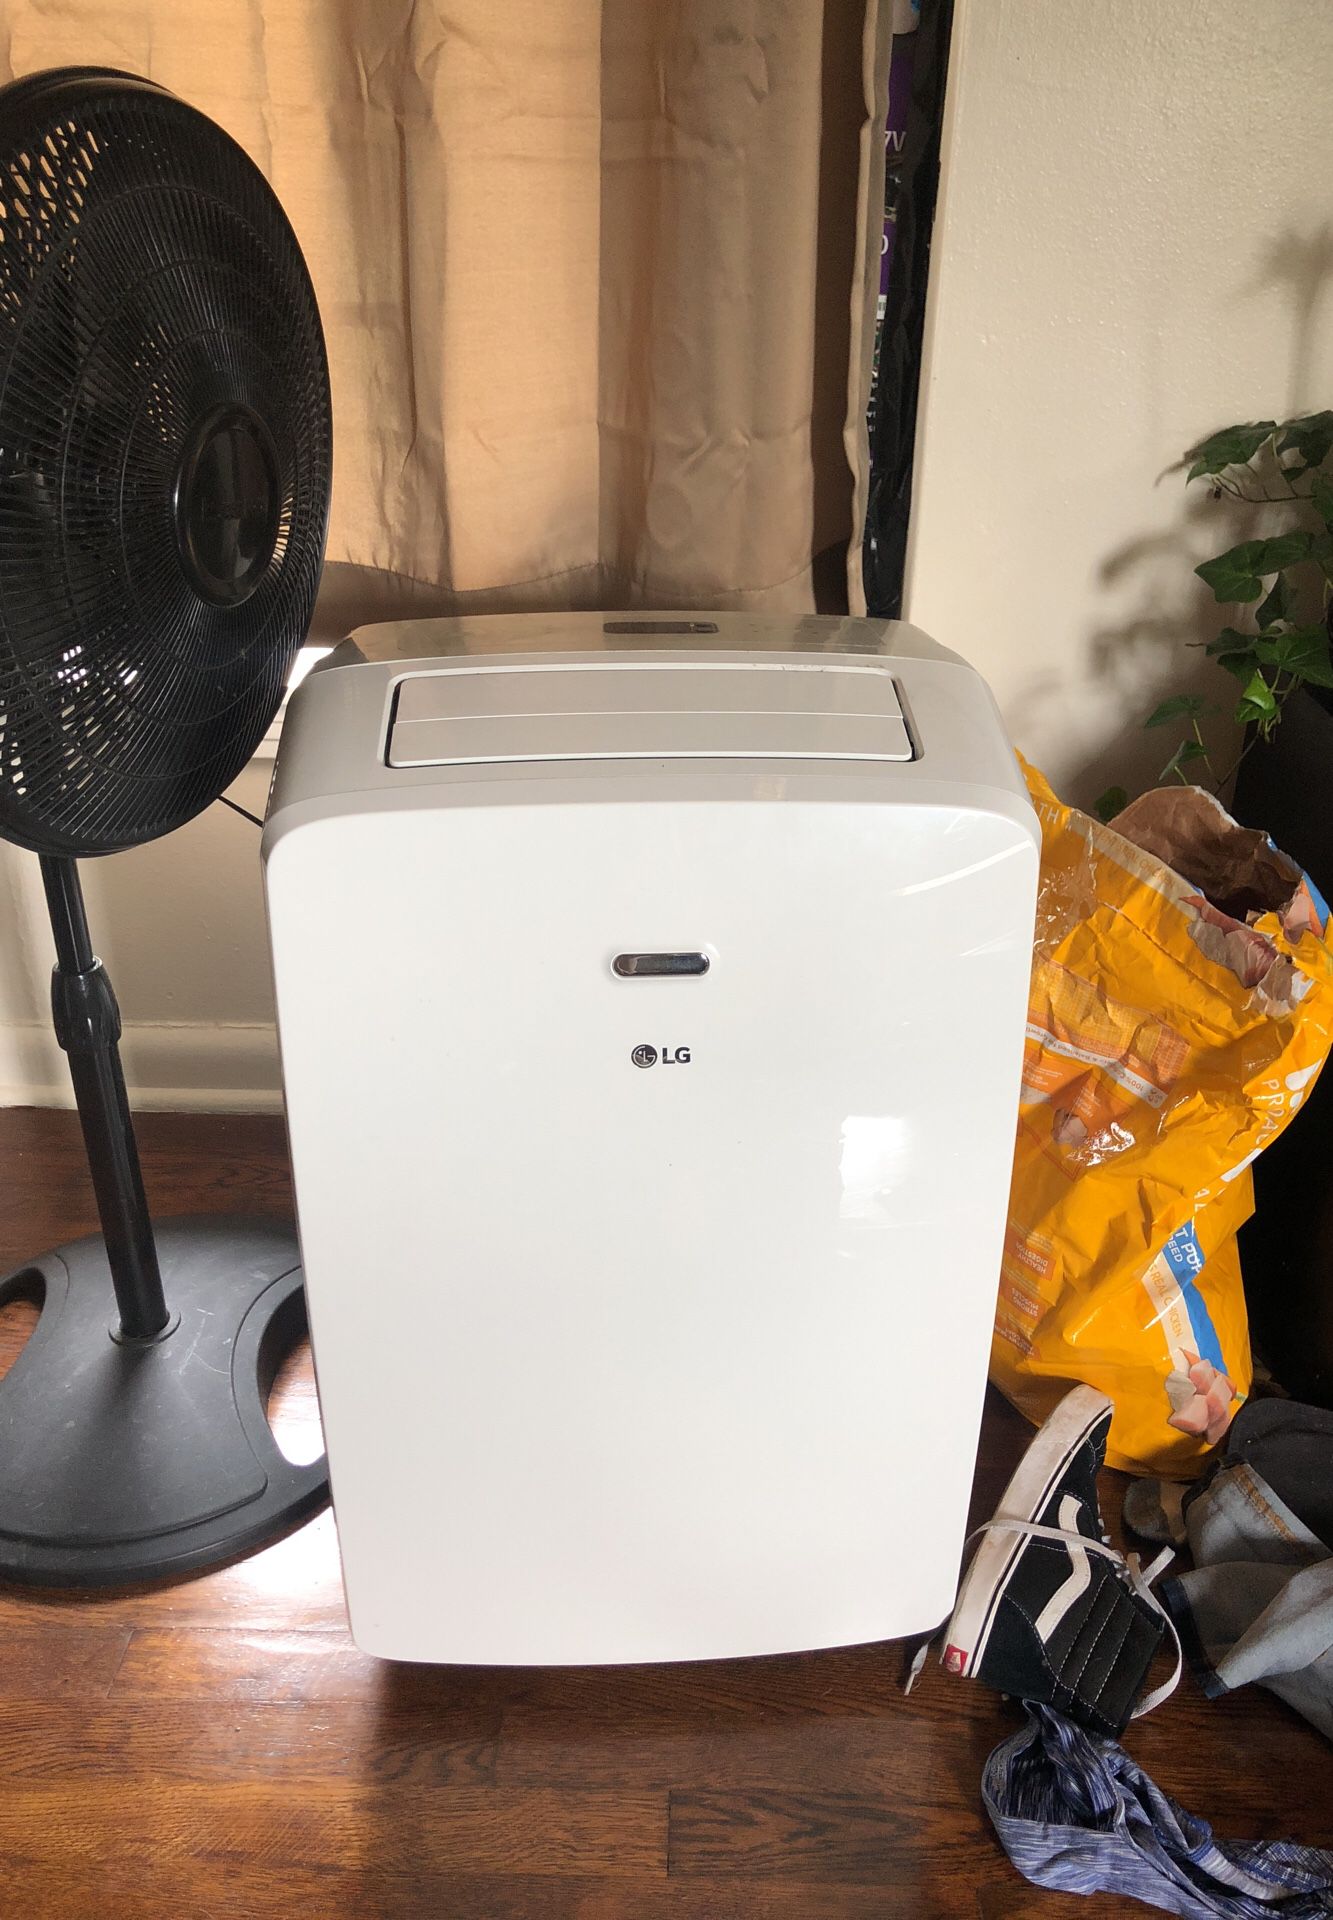 LG portable air conditioning unit, dehumidifier